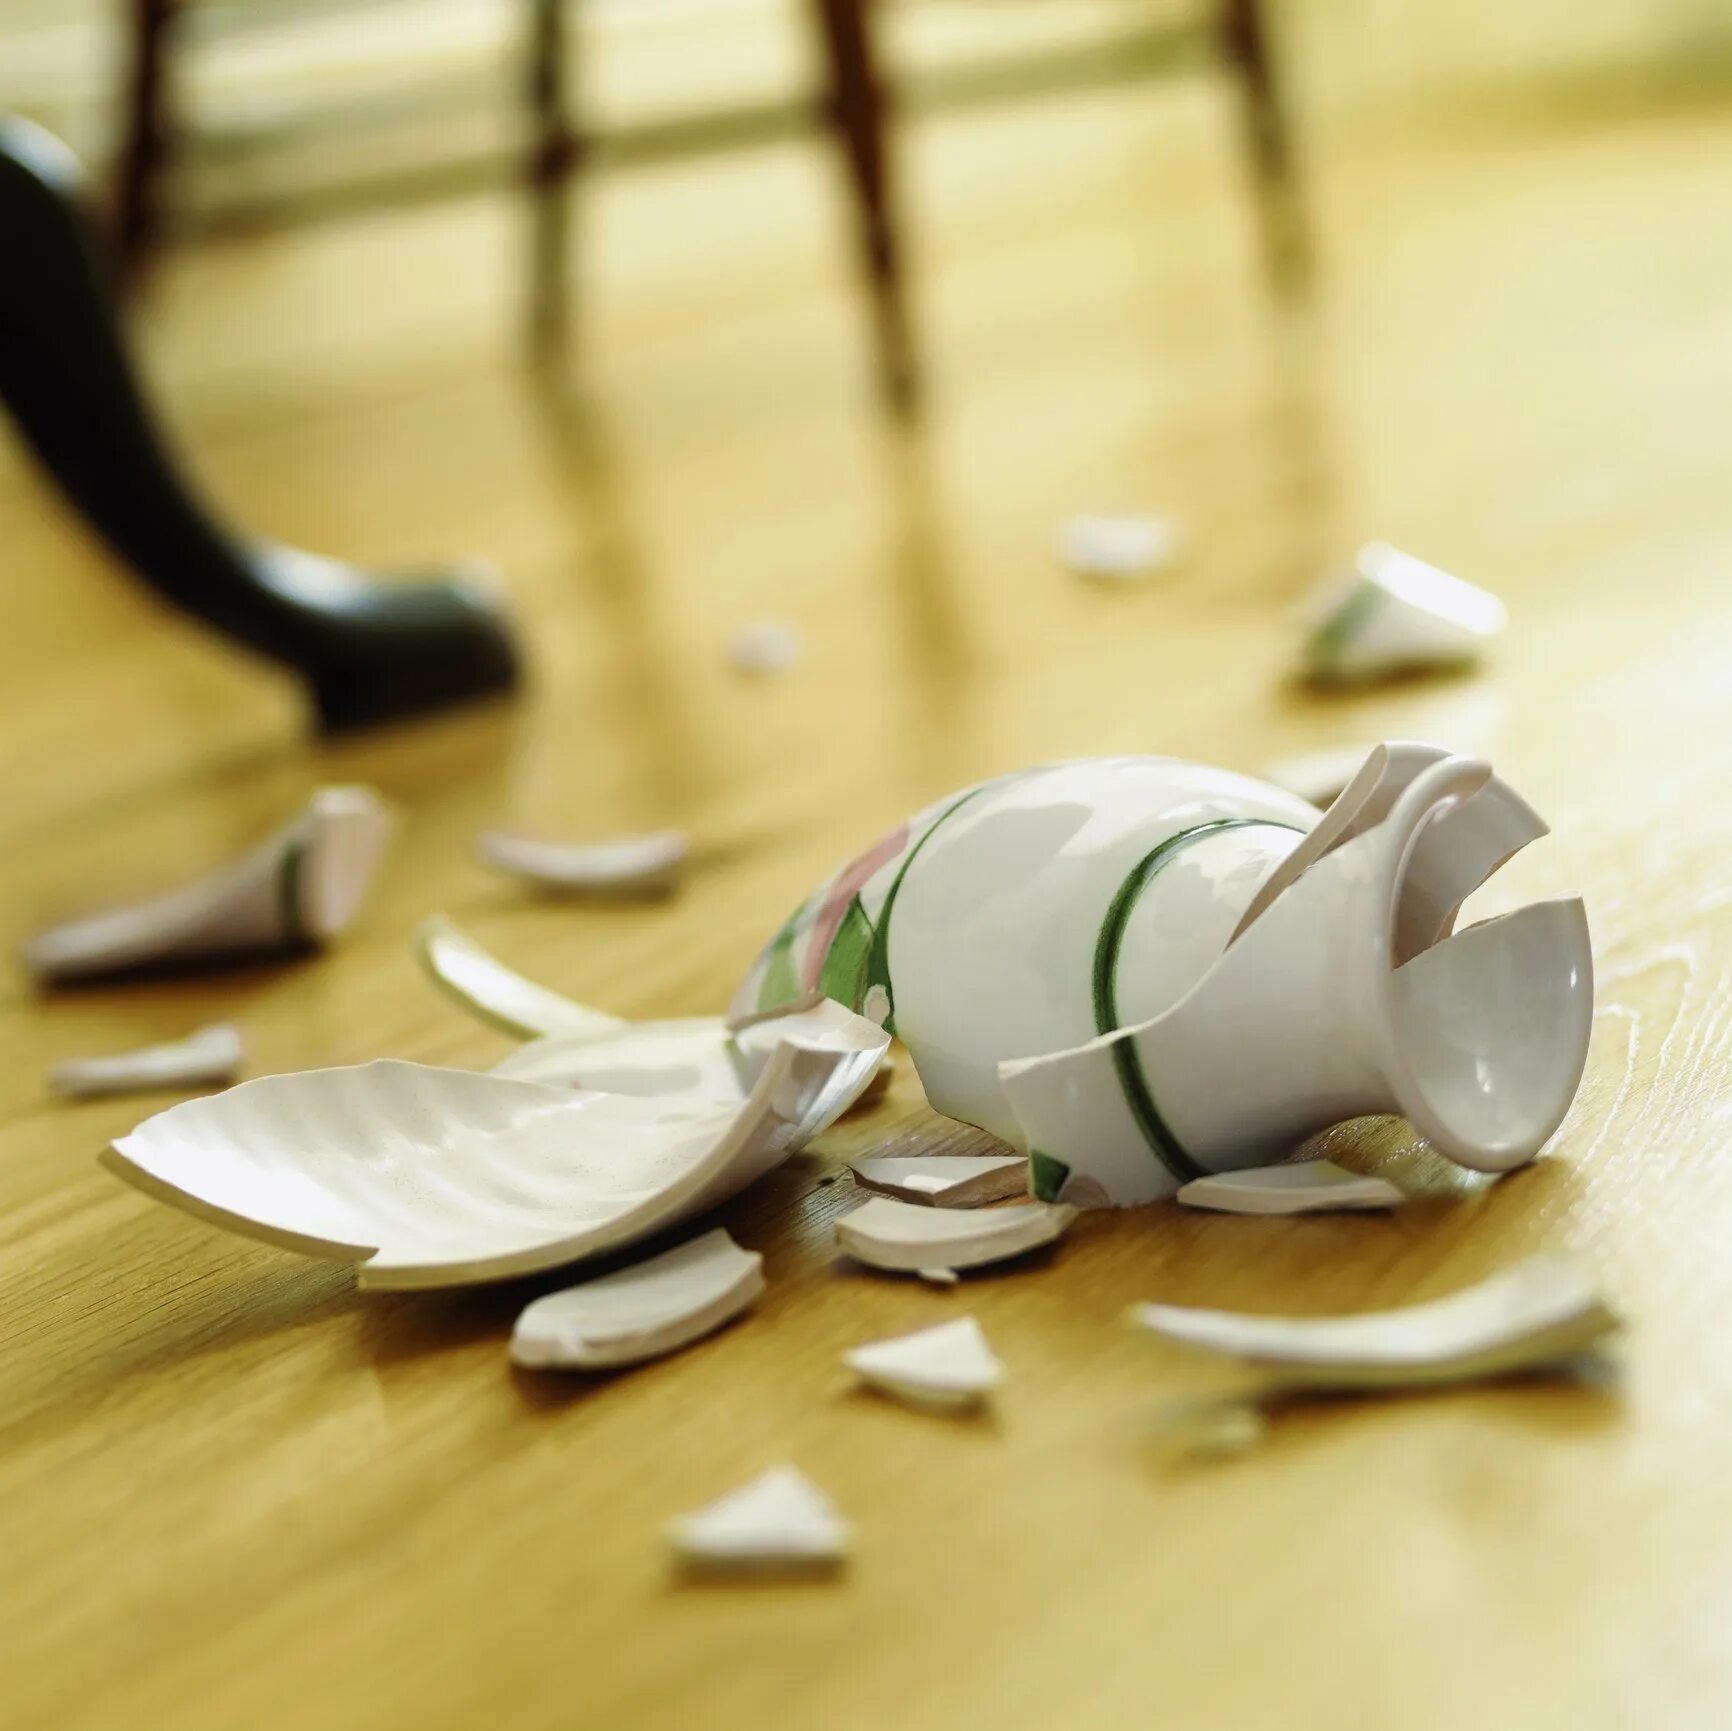 Разбитая ваза. Разбитая посуда. Разбитая ваза на полу. Осколки вазы на полу.